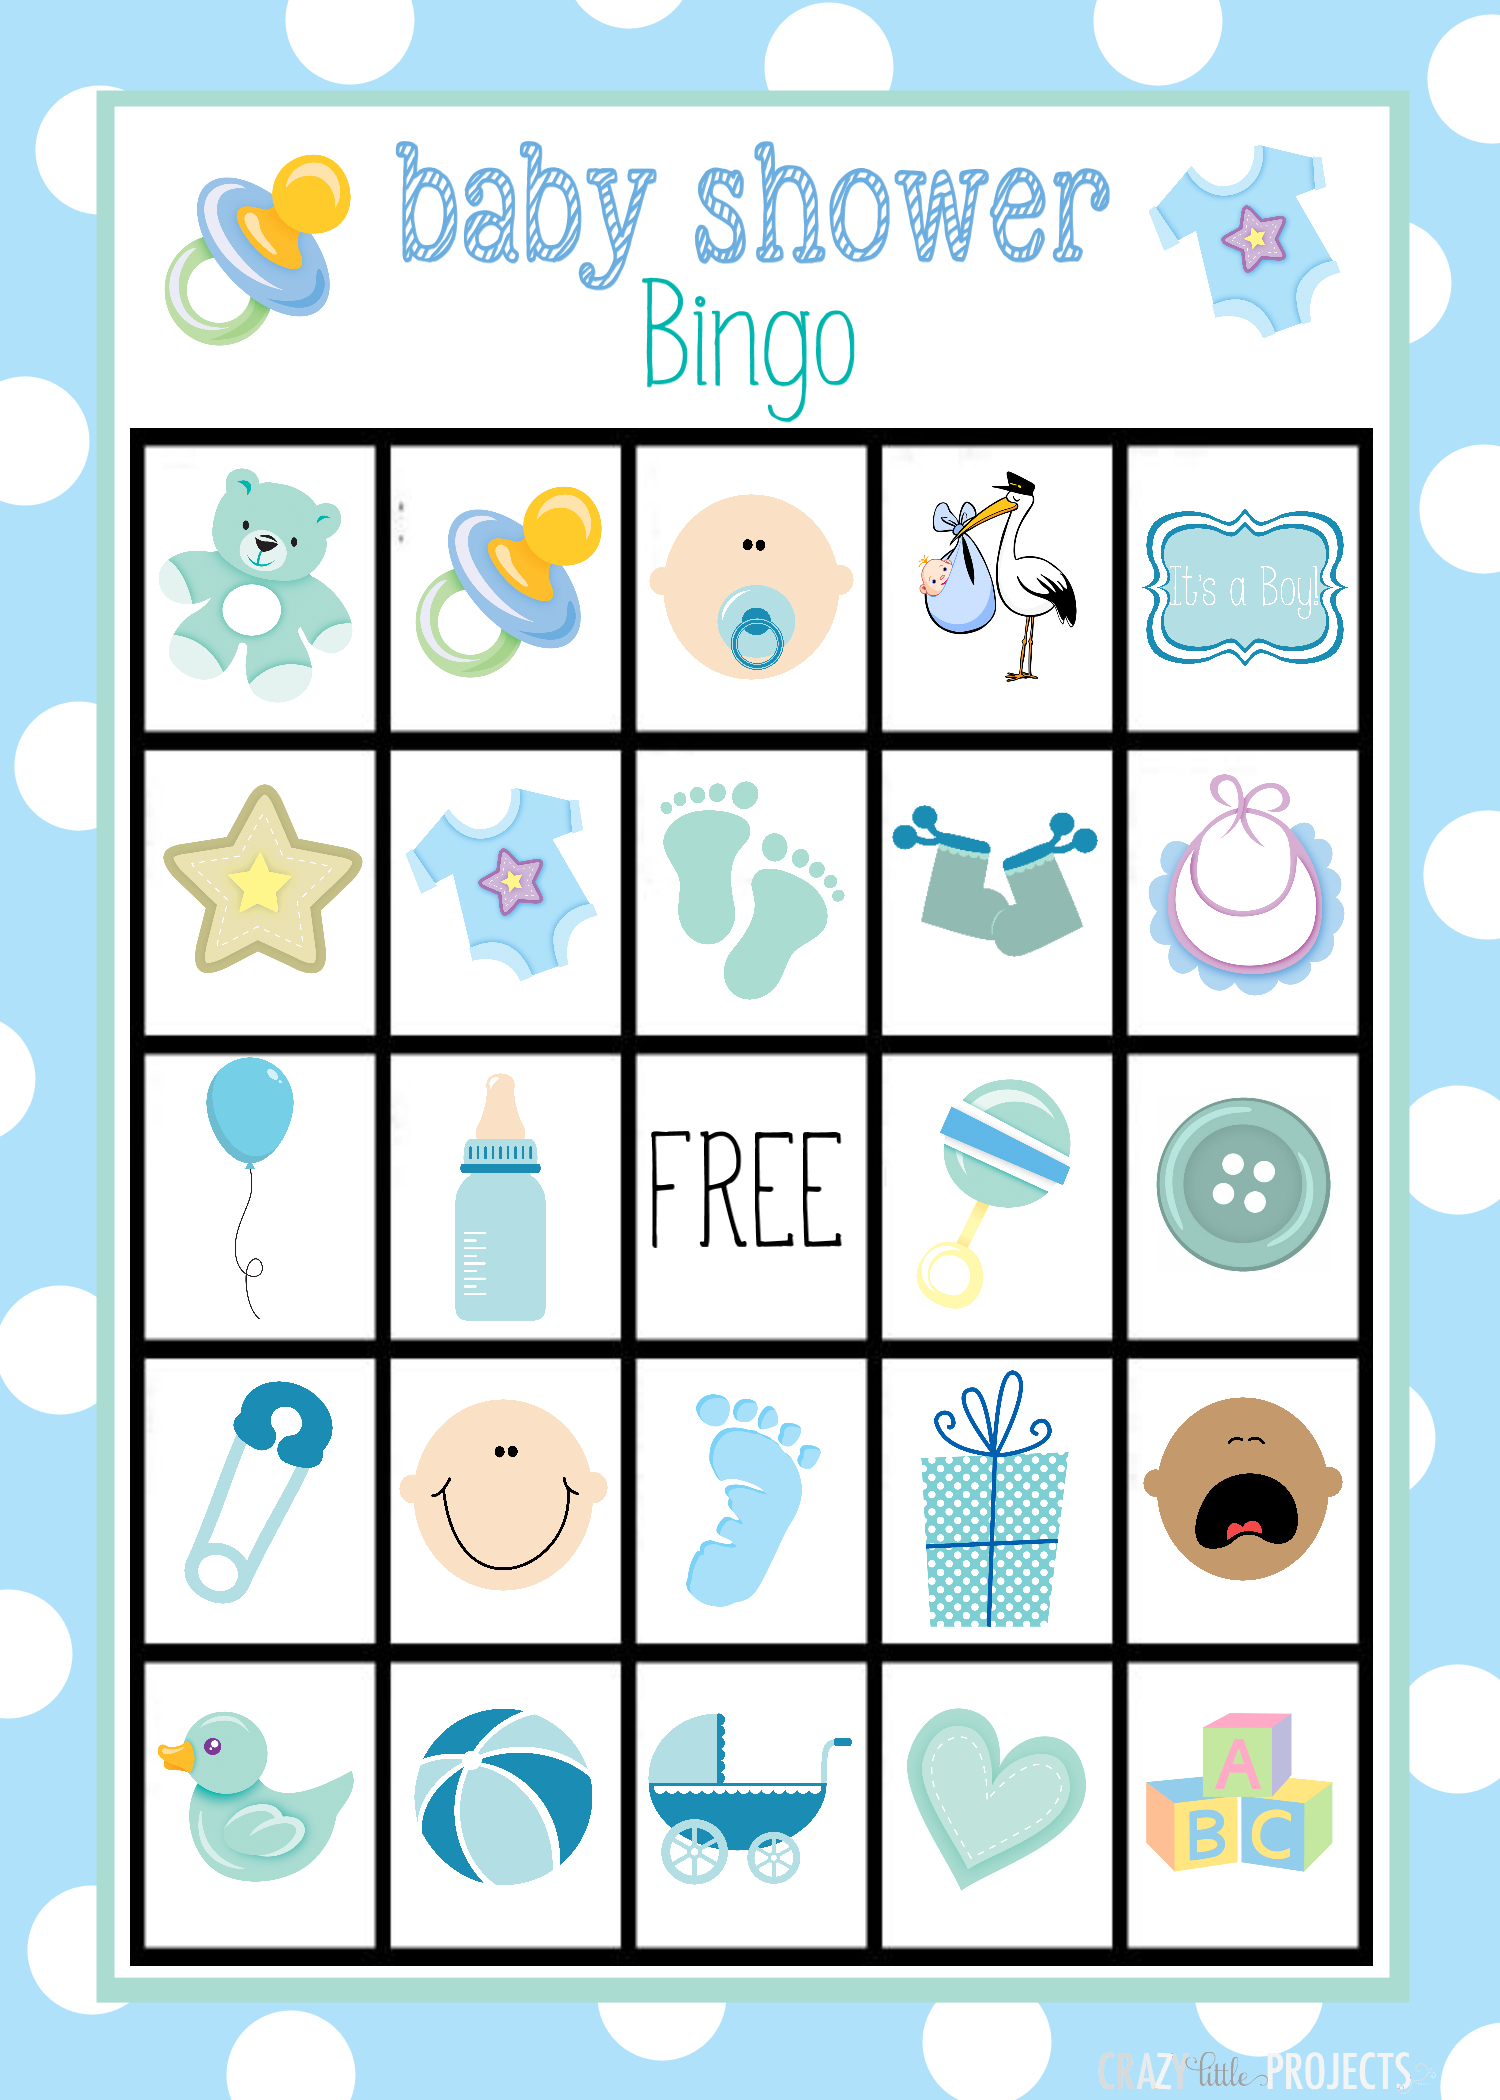 Baby Shower Bingo Cards - Free Printable Baby Shower Bingo Cards